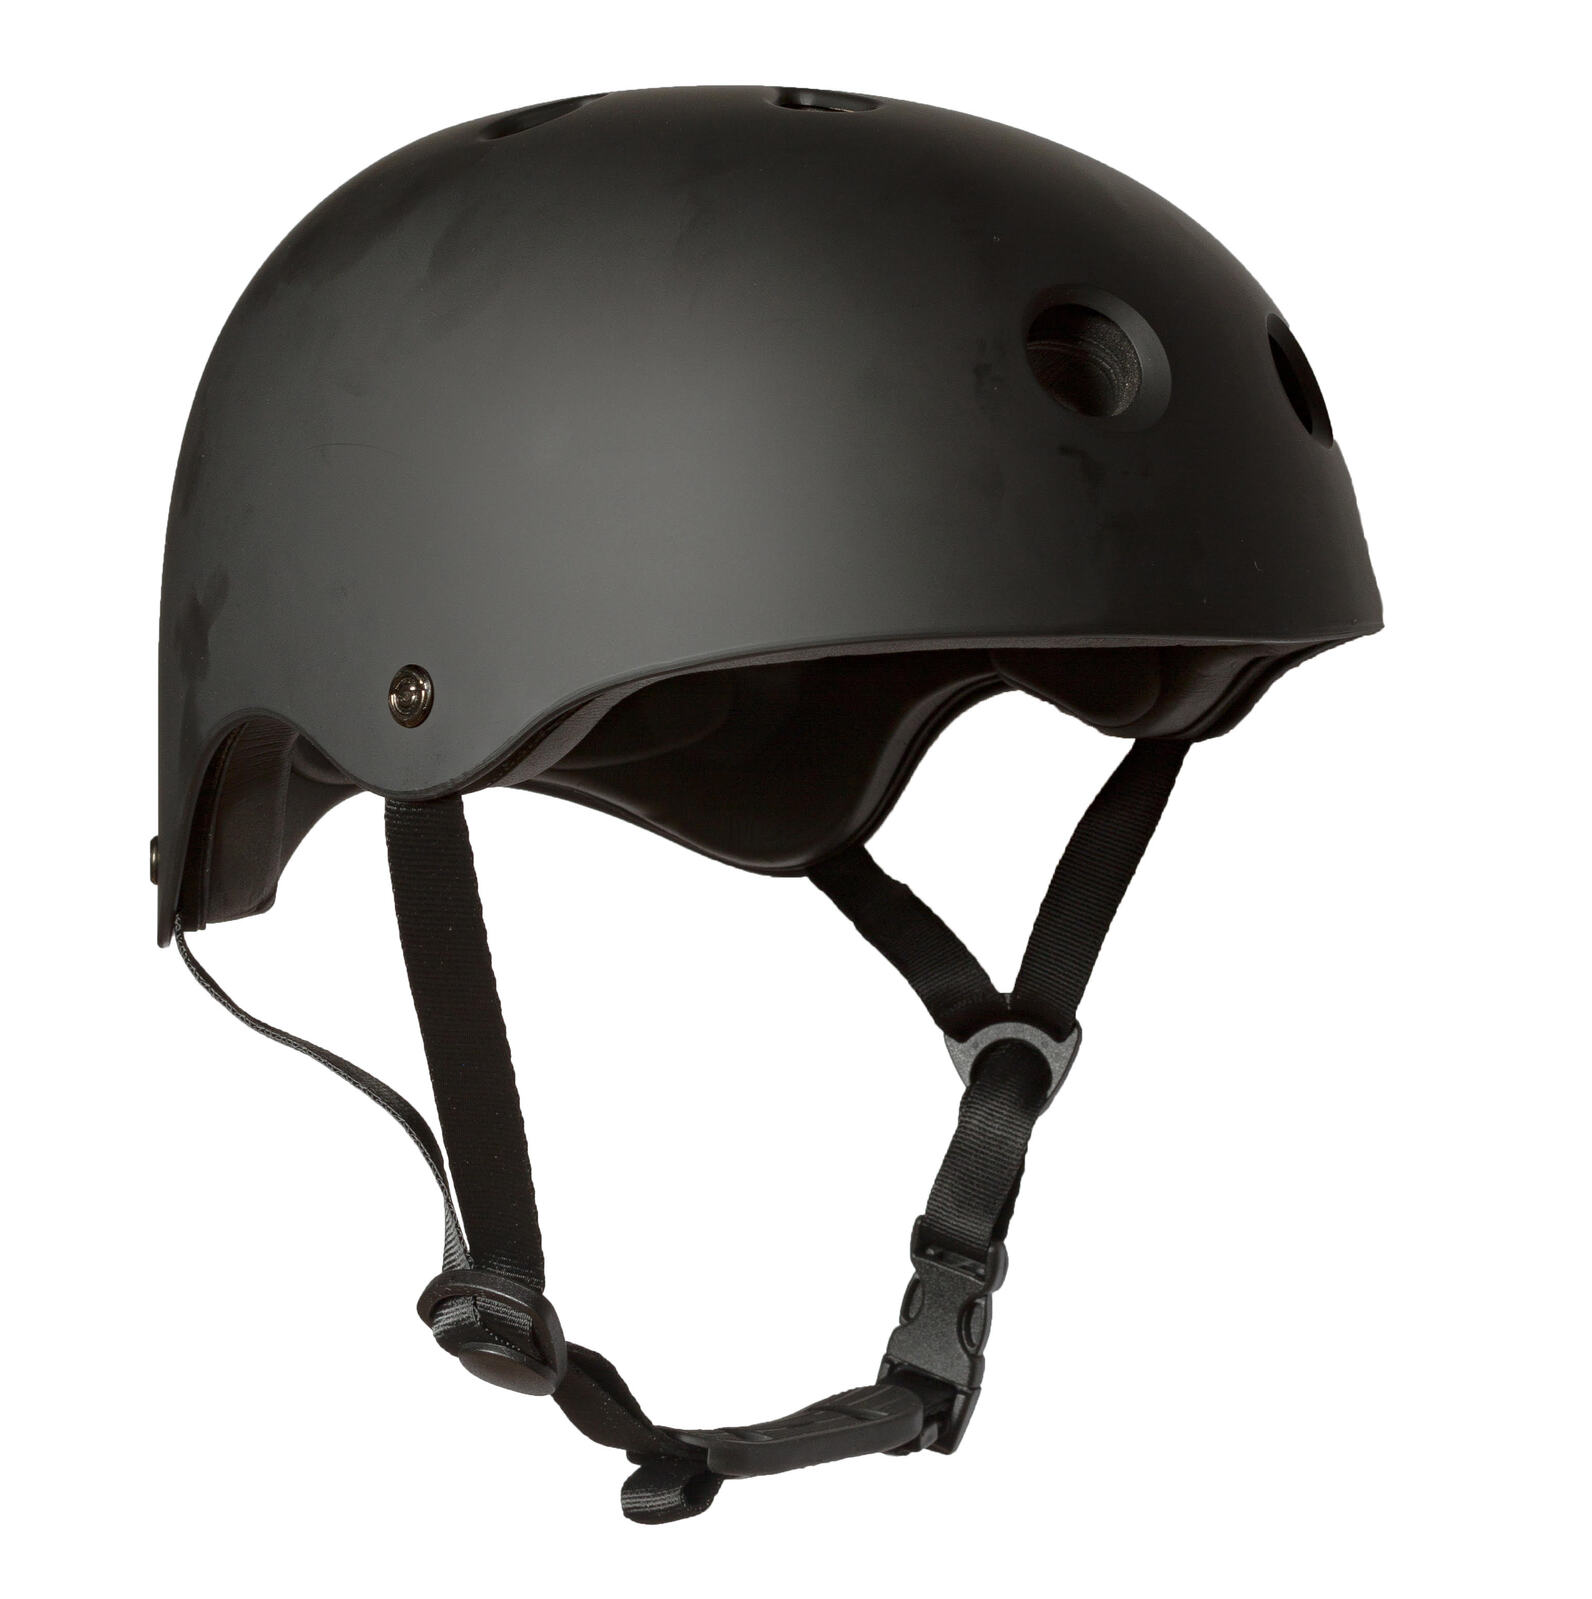 SOUTHBY  FOCAL Helmet (SB01HNFOCBLK) Black-